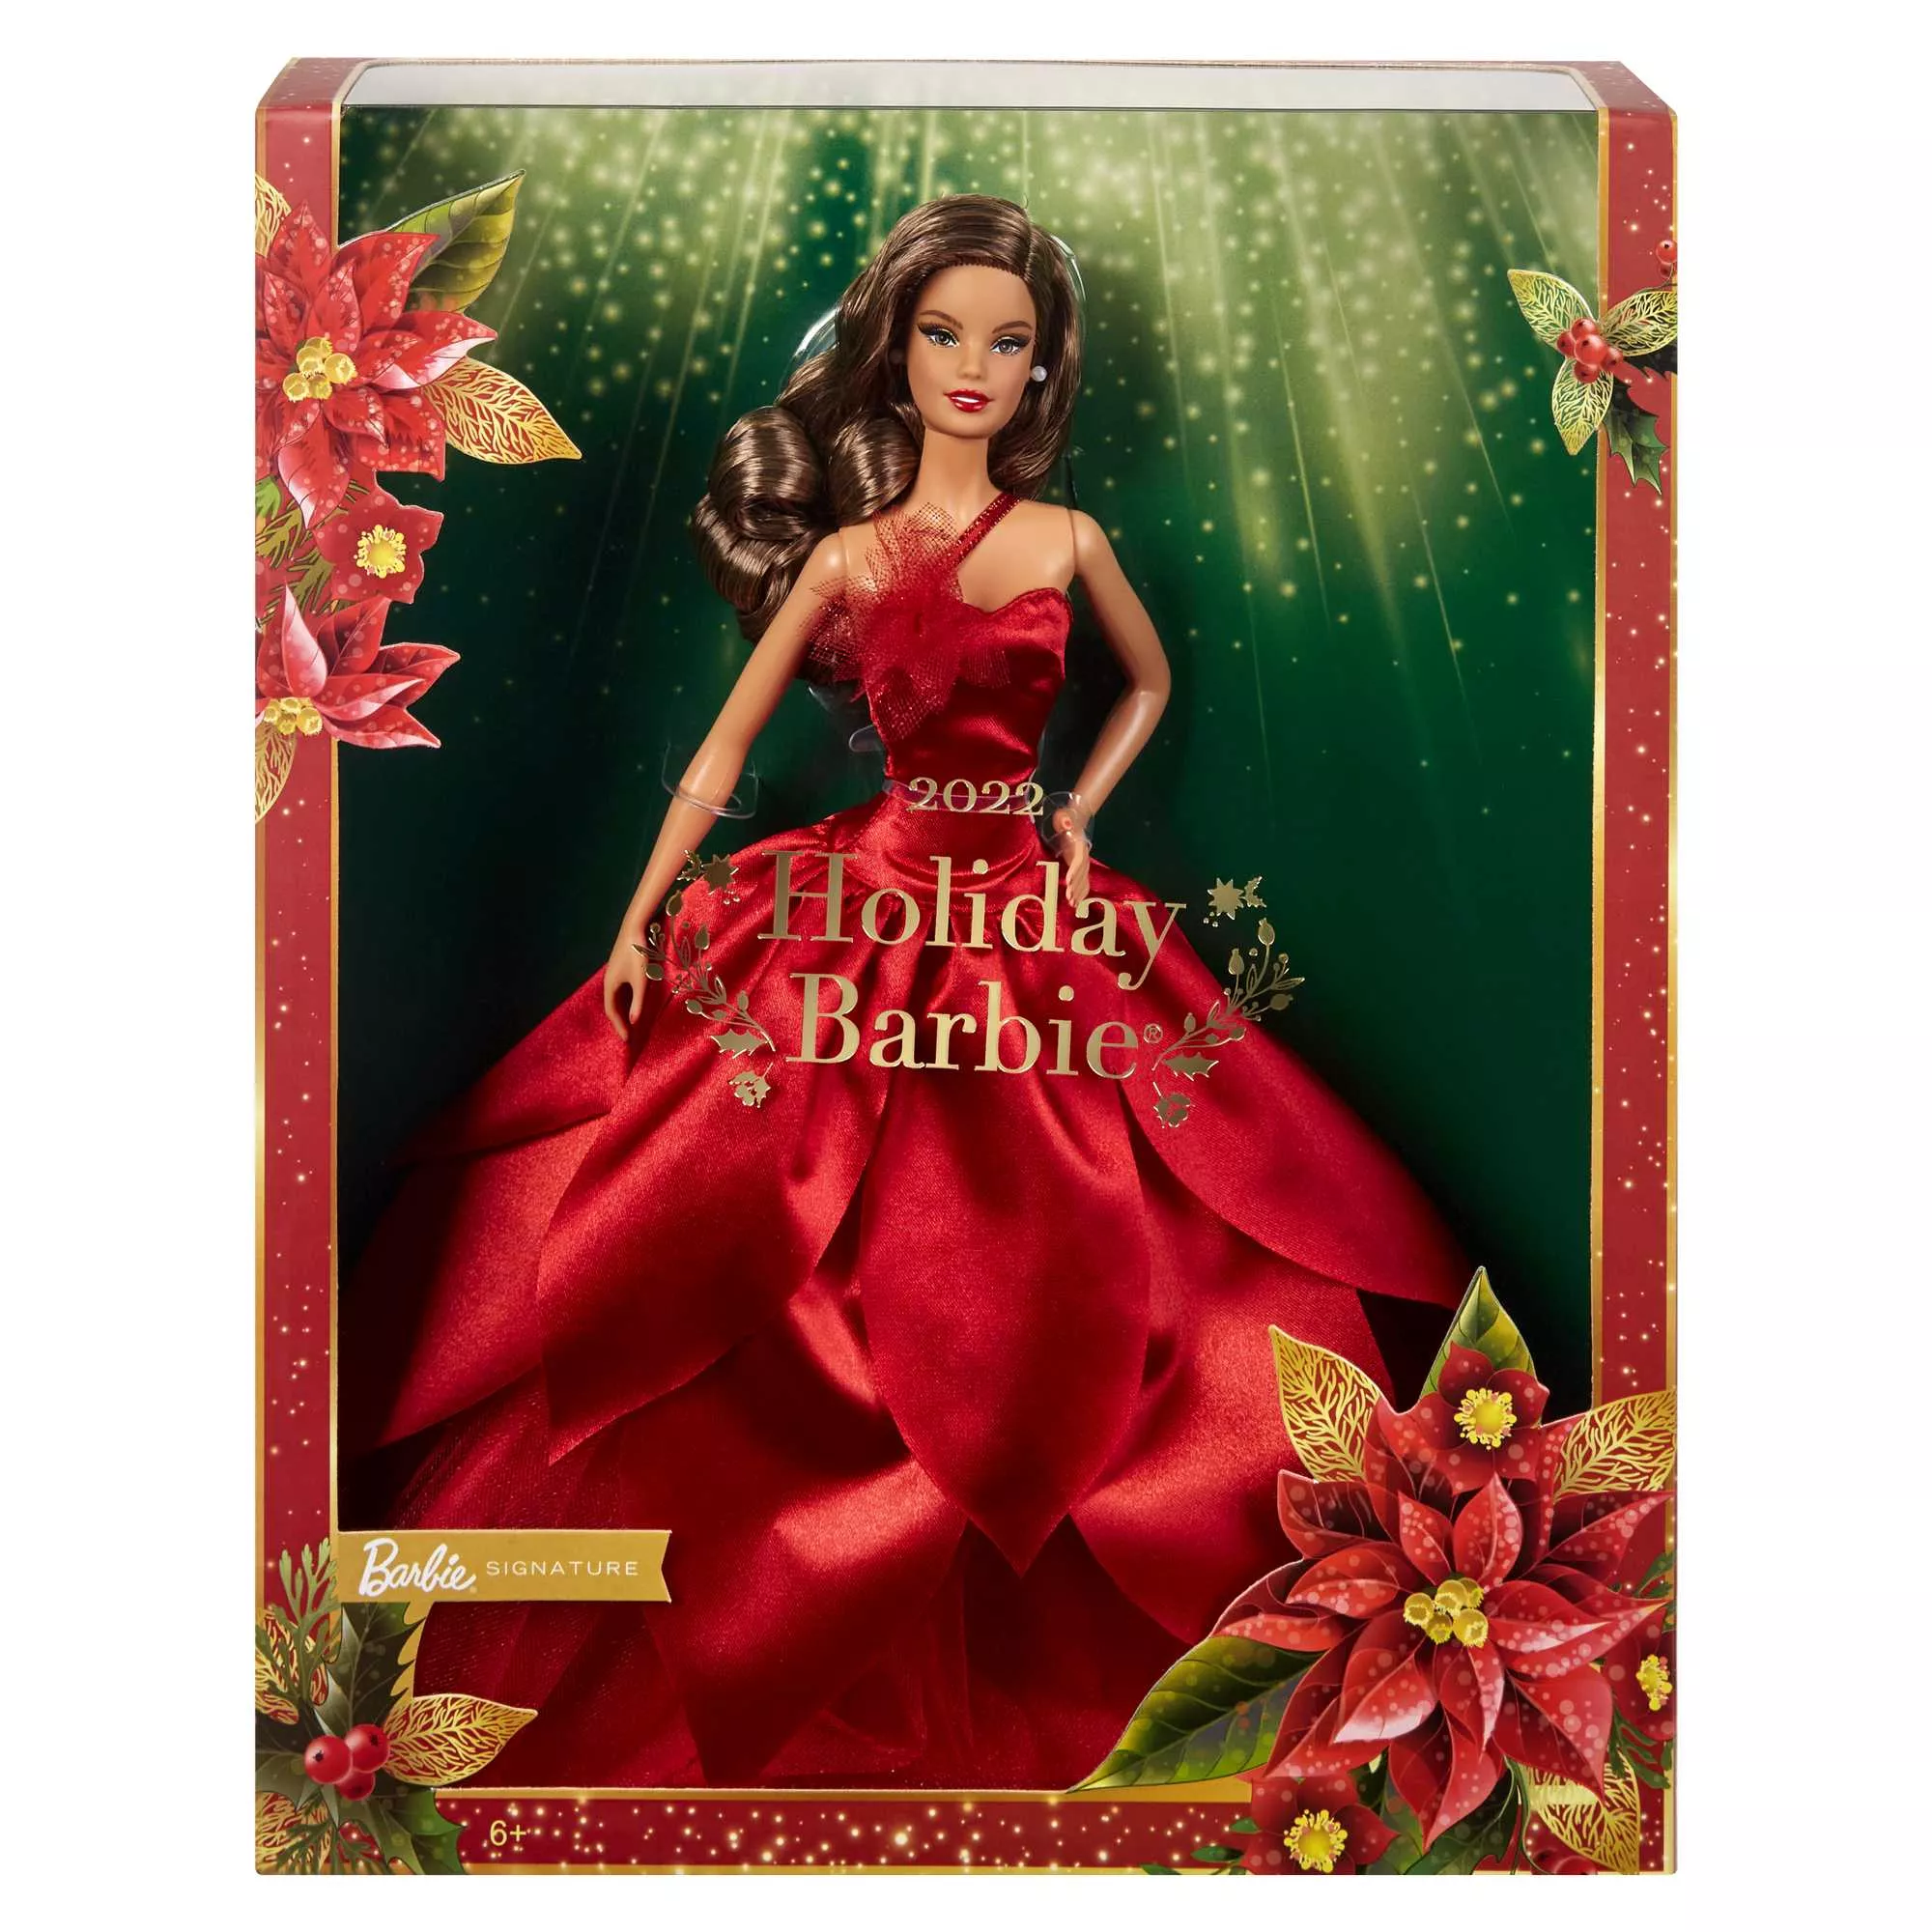  Barbie Signature Holiday Barbie 2 2022